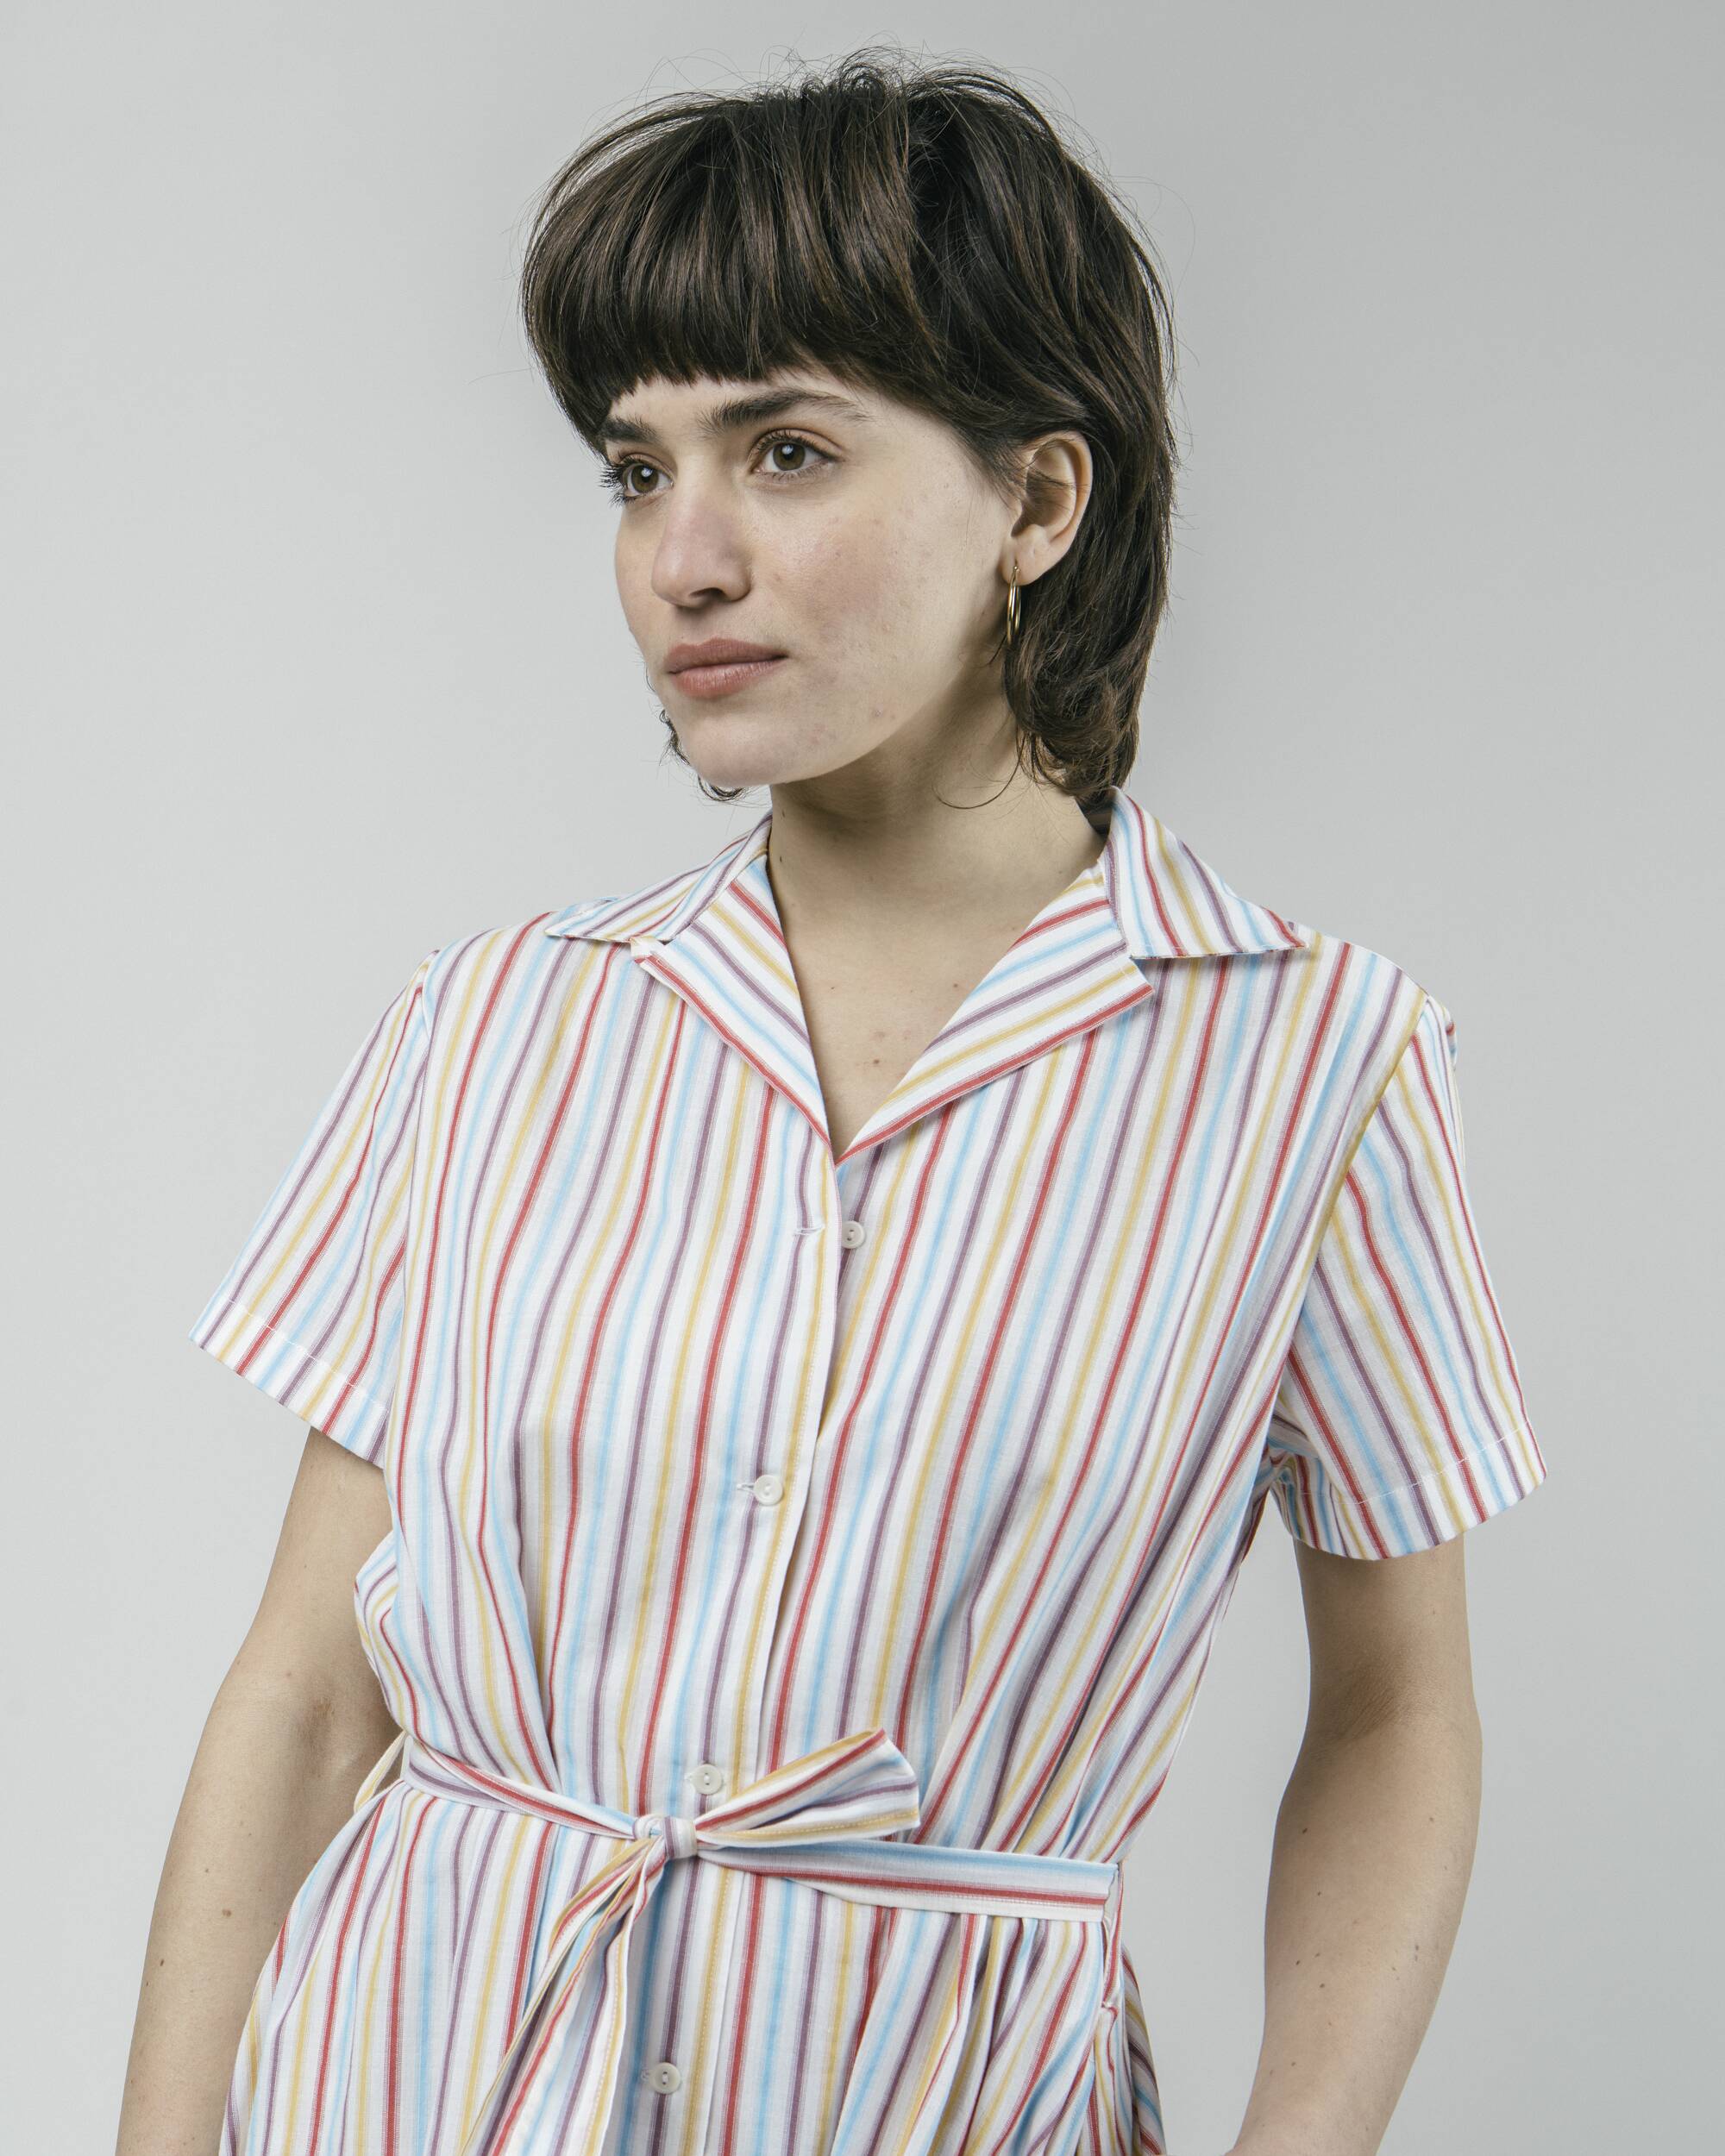 Dress "Downtown Stripes" made of 100% organic cotton from Brava Fabrics